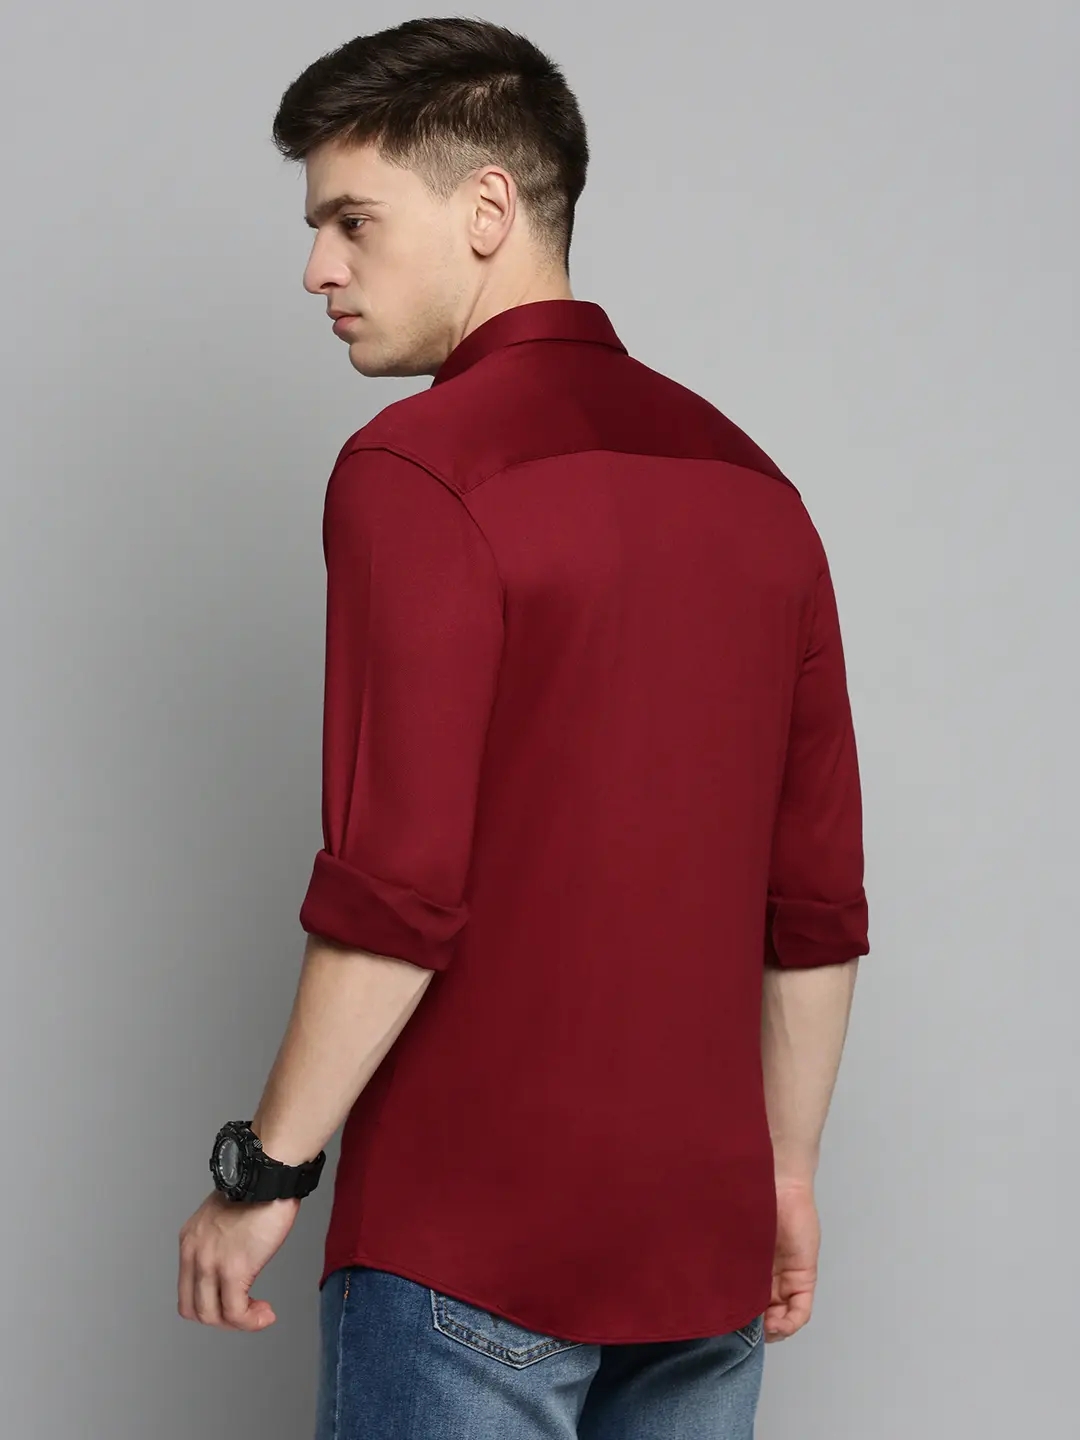 SHOWOFF Men's Spread Collar Maroon Solid Shirt